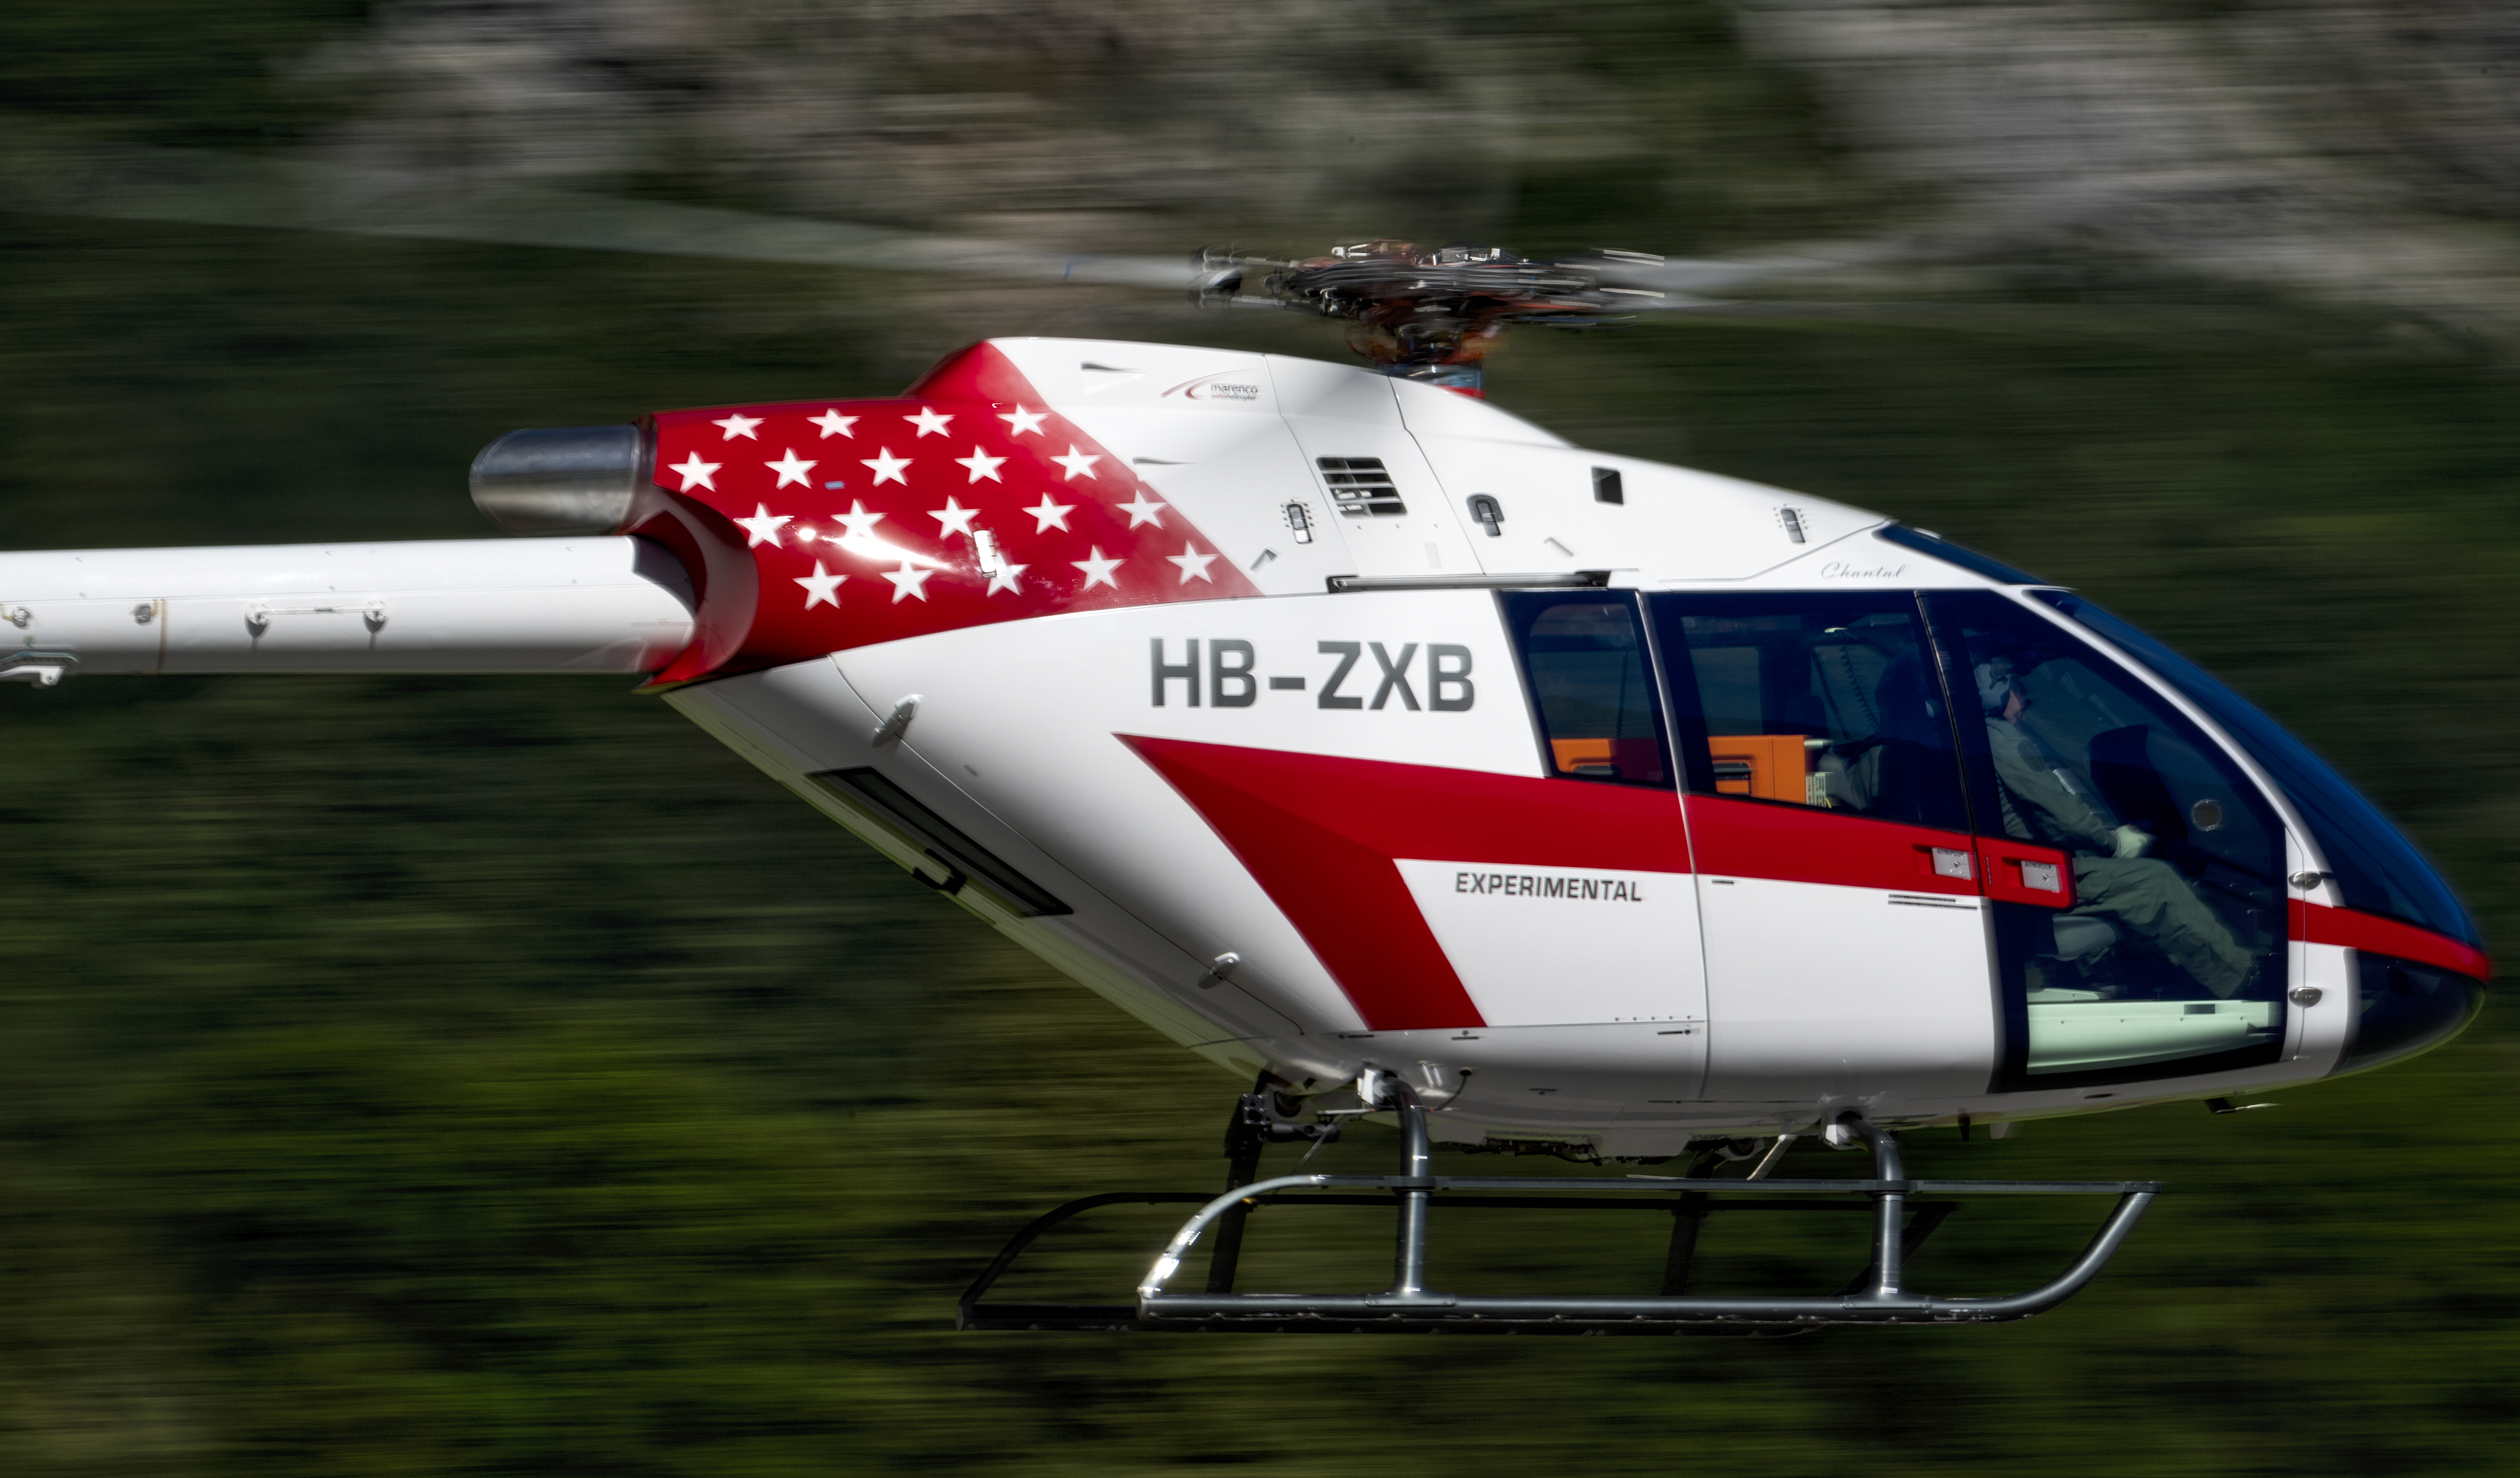 Marenco Swisshelicopter in flight